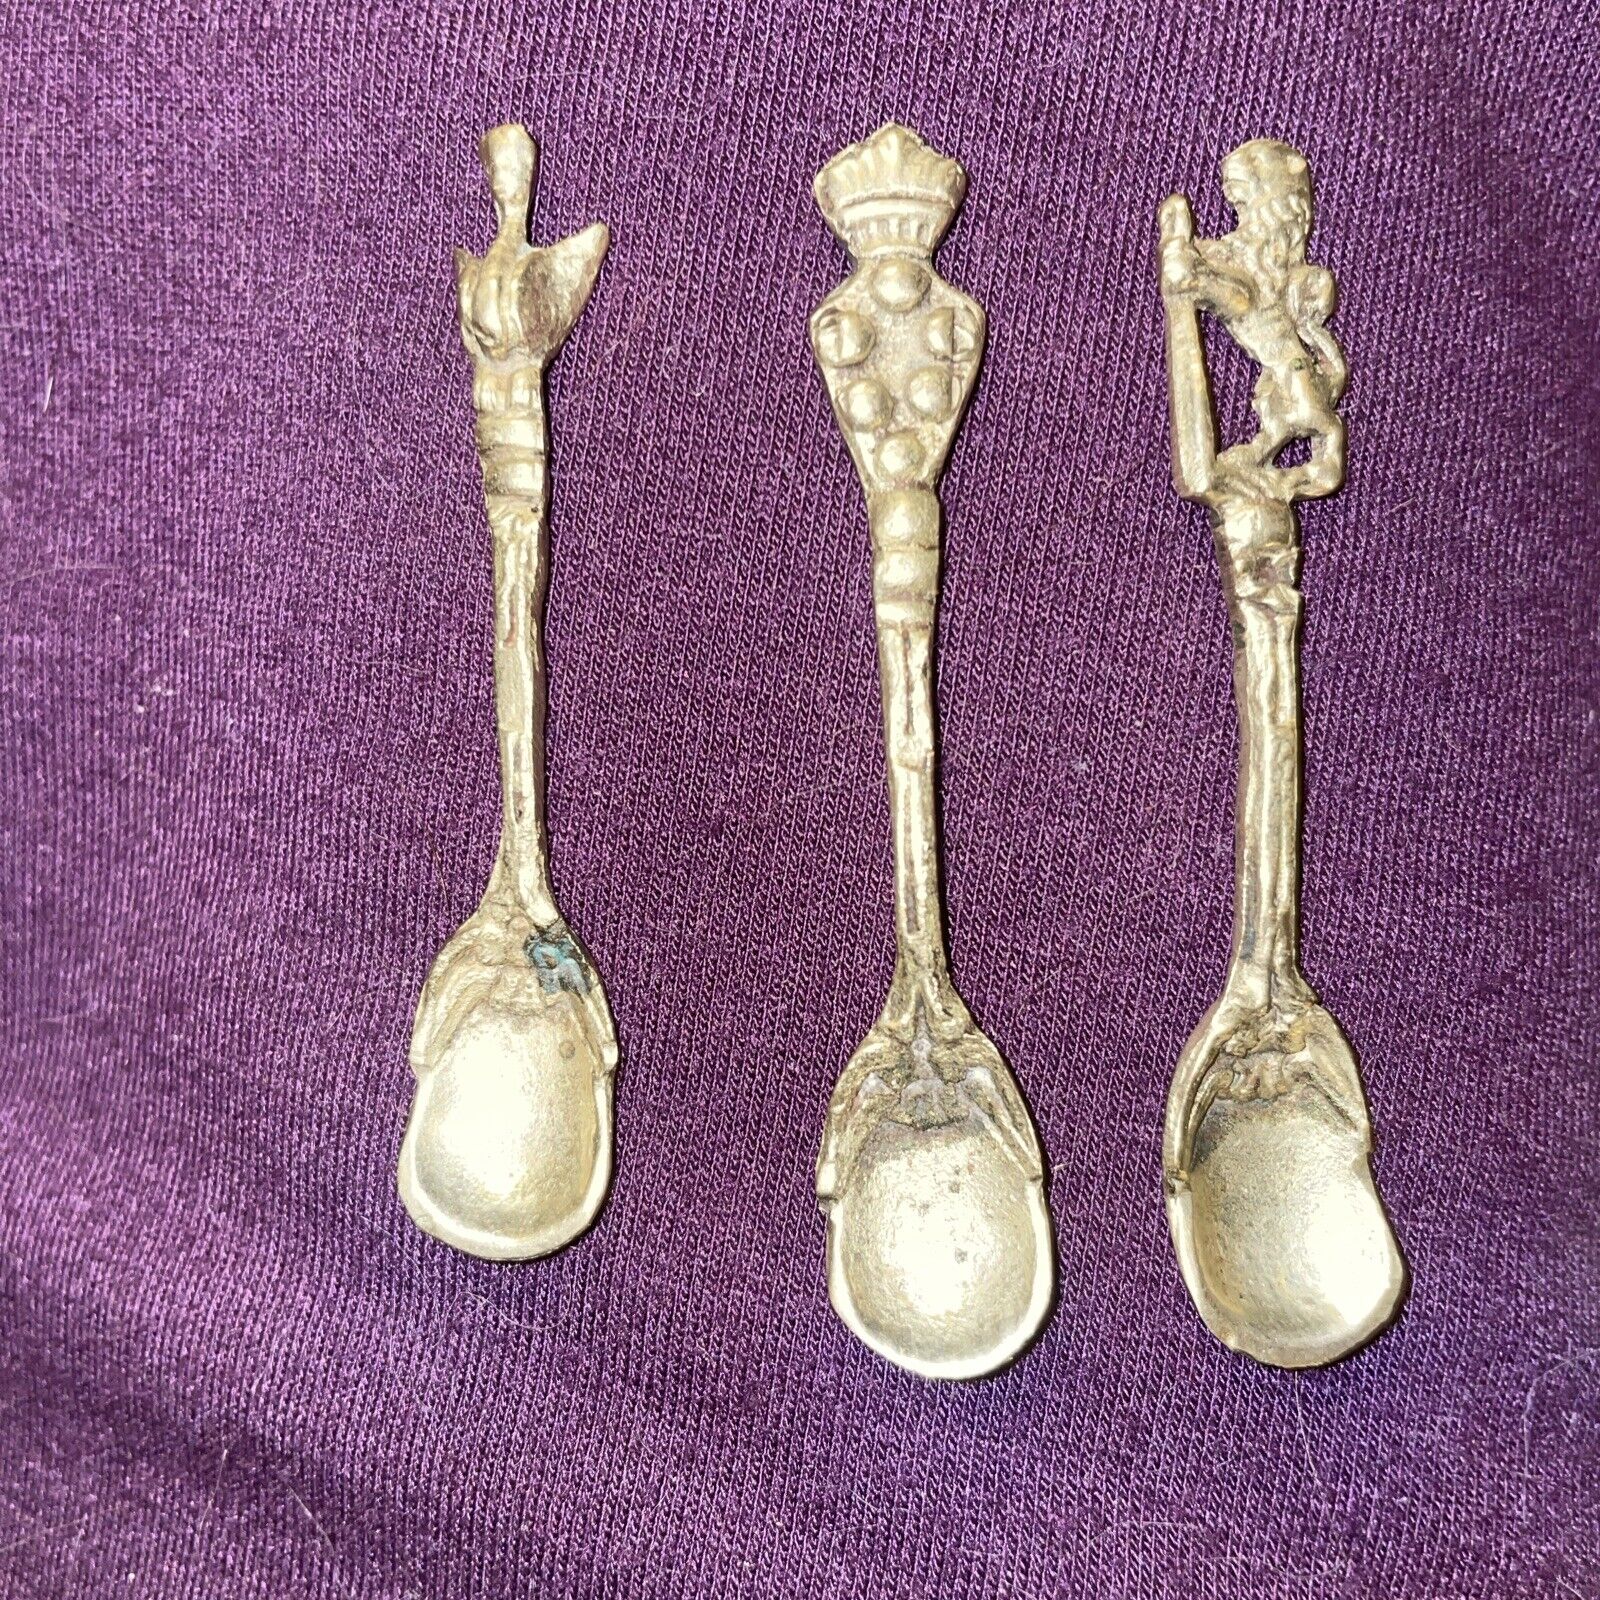 3 Italian Holy Water /Salt Cellar Spoons Rare Unique Authentic Antique Brass